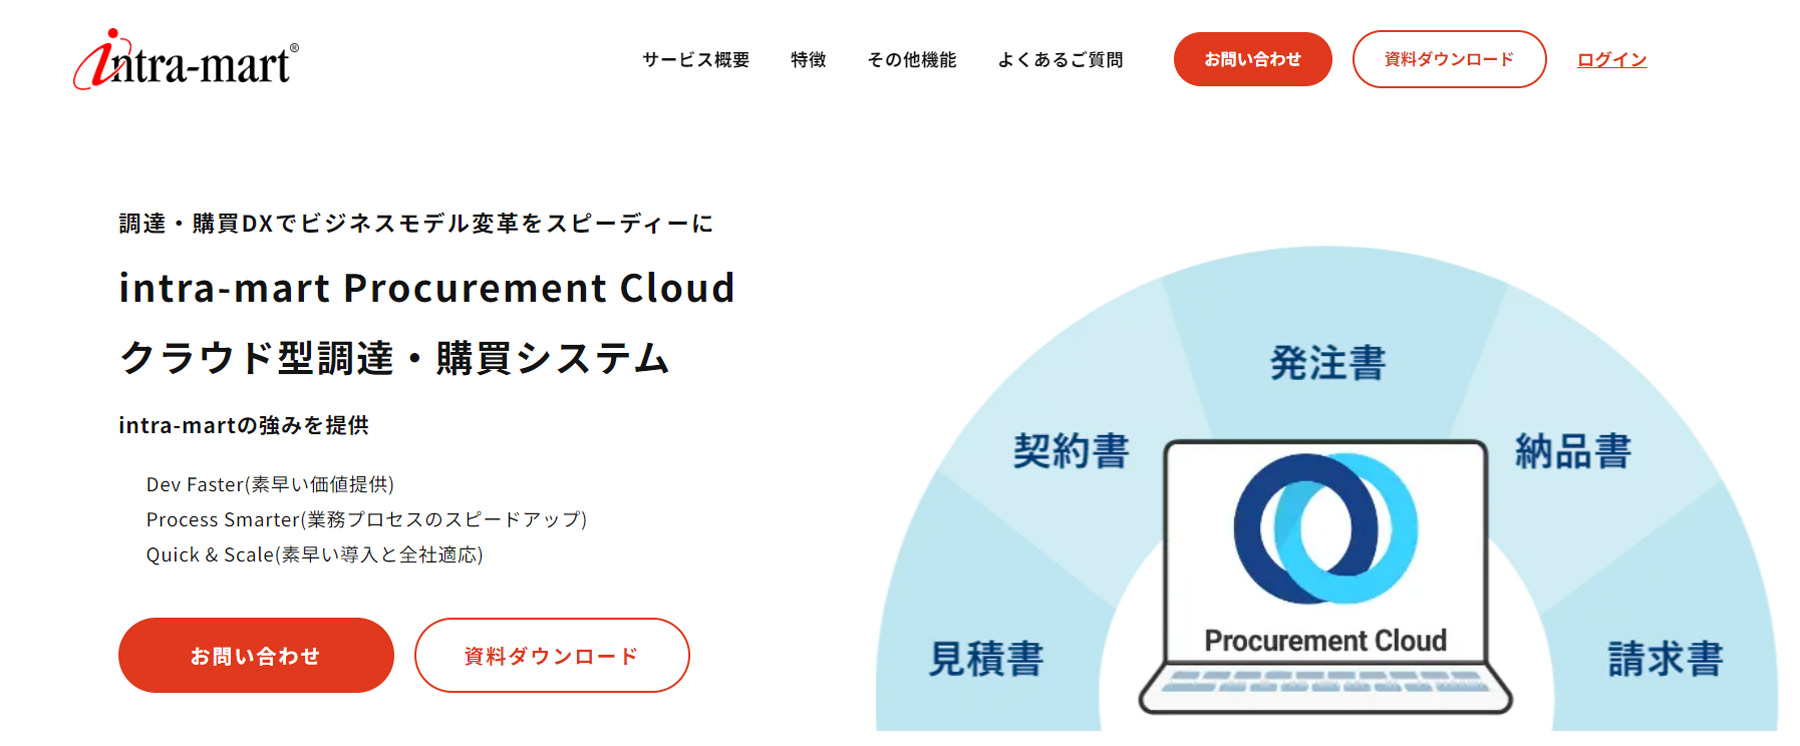 intra-mart Procurement Cloud公式Webサイト